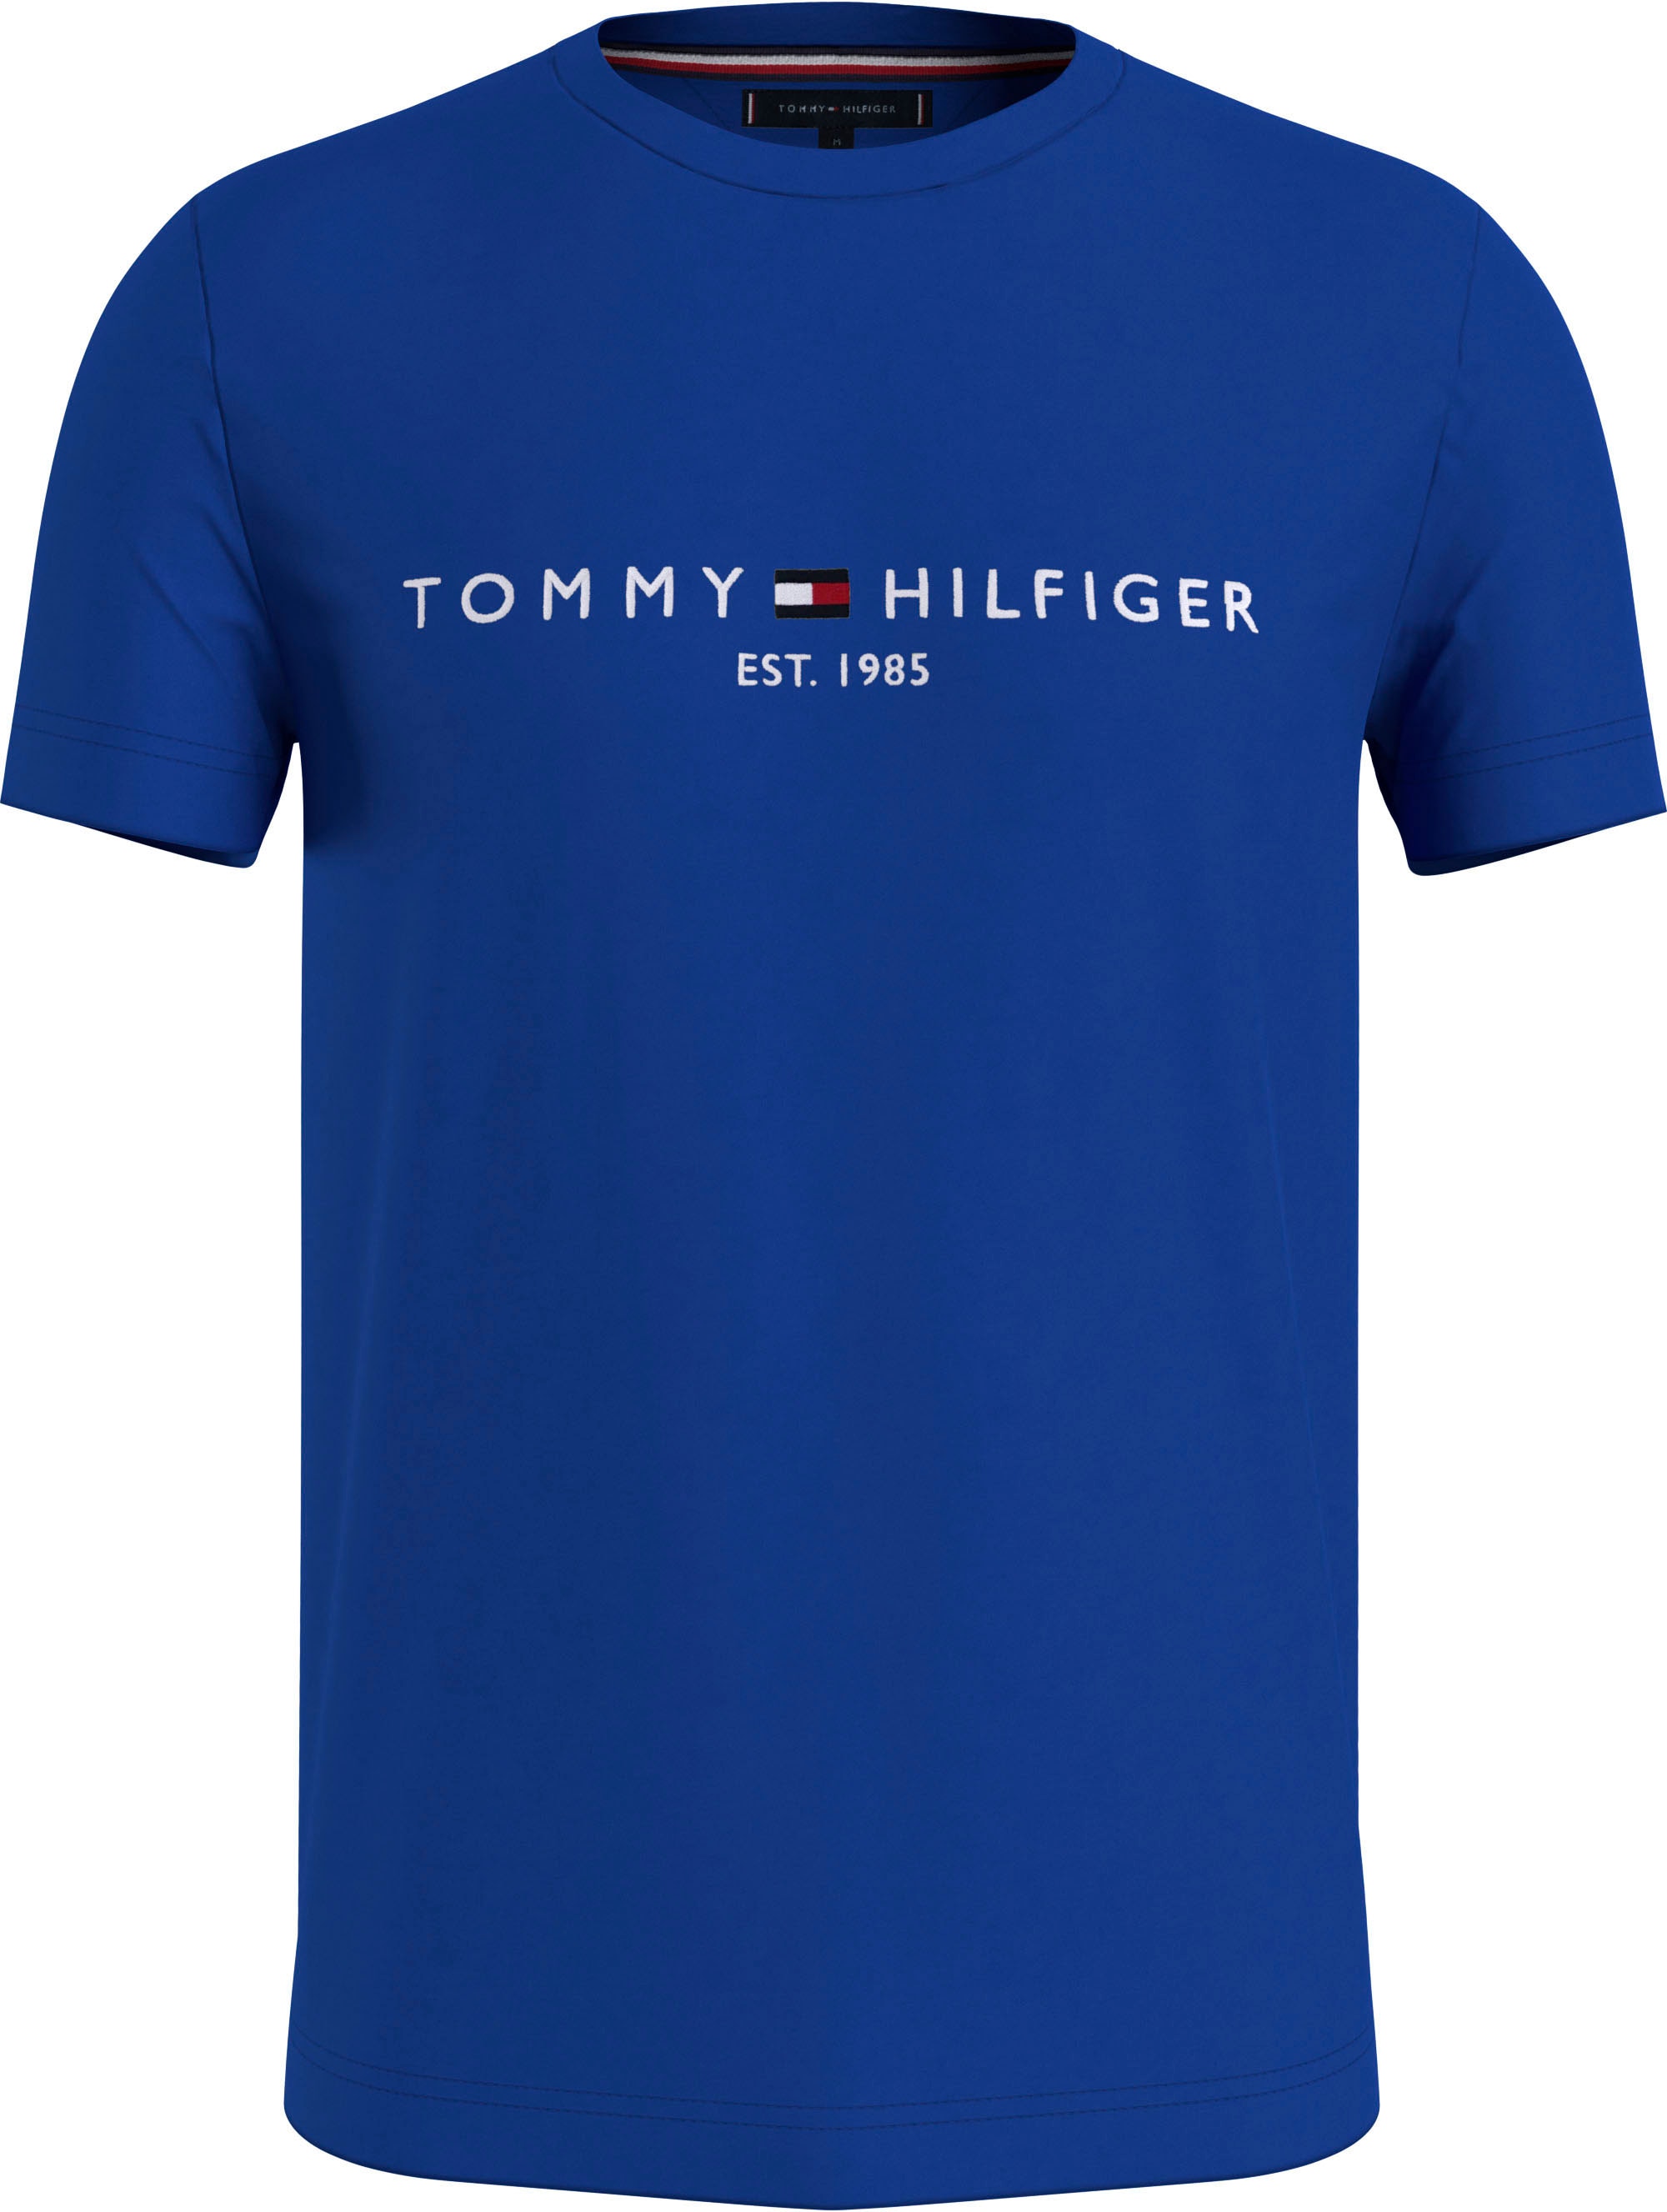 TOMMY HILFIGER Marškinėliai »TOMMY LOGO TEE«